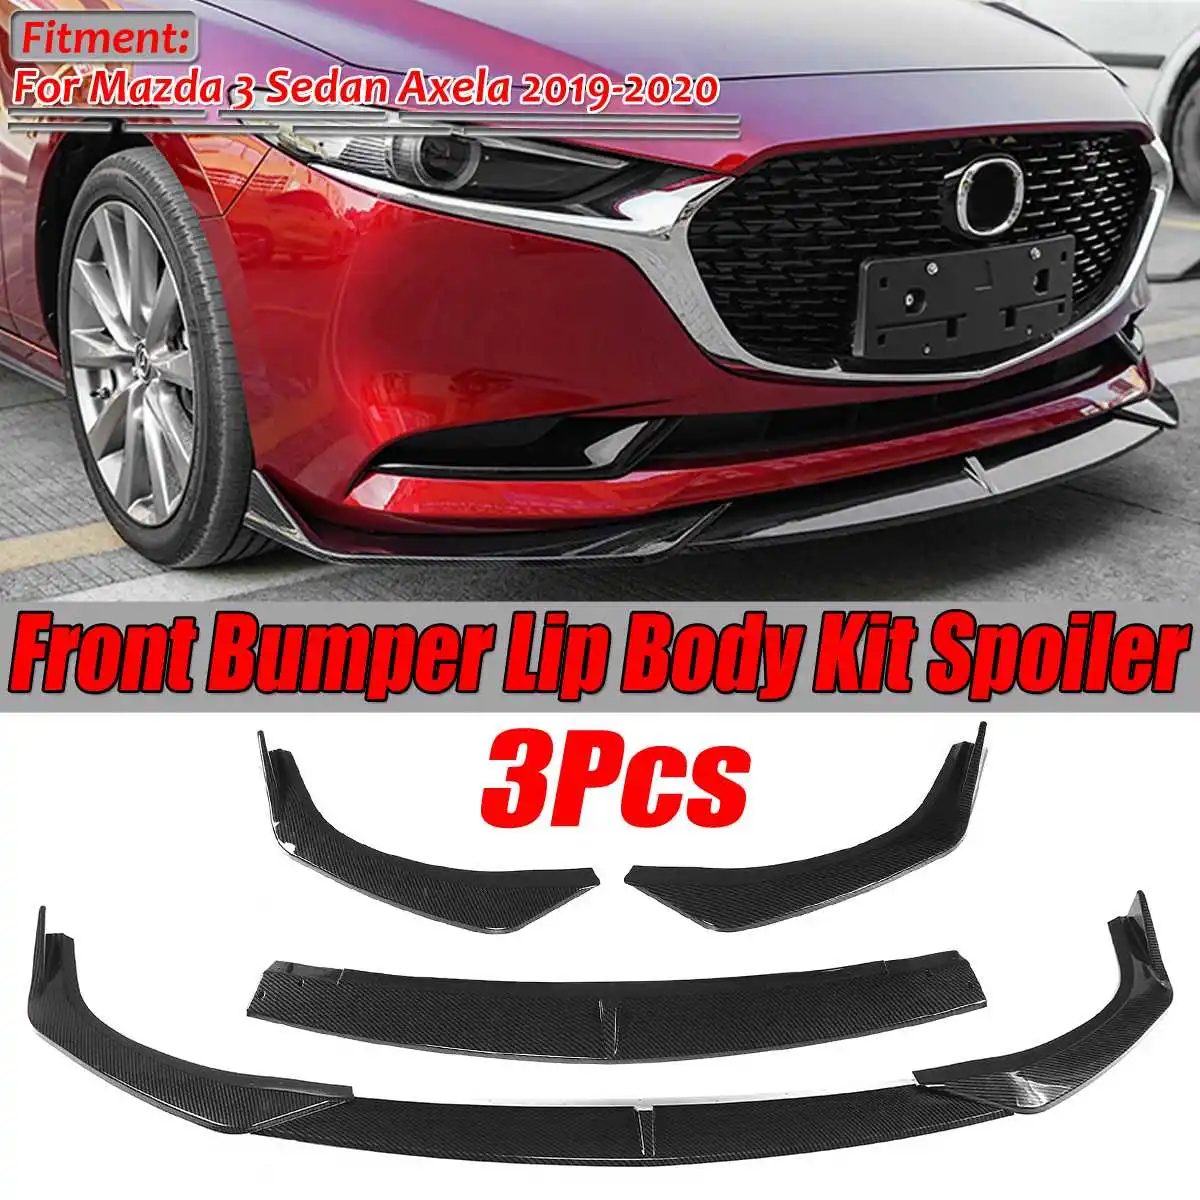 

3PCS Carbon Fiber Look/Black Car Front Bumper Splitter Lip Diffuser Spoiler Guard Cover Trim For Mazda 3 Sedan Axela 2019 2020